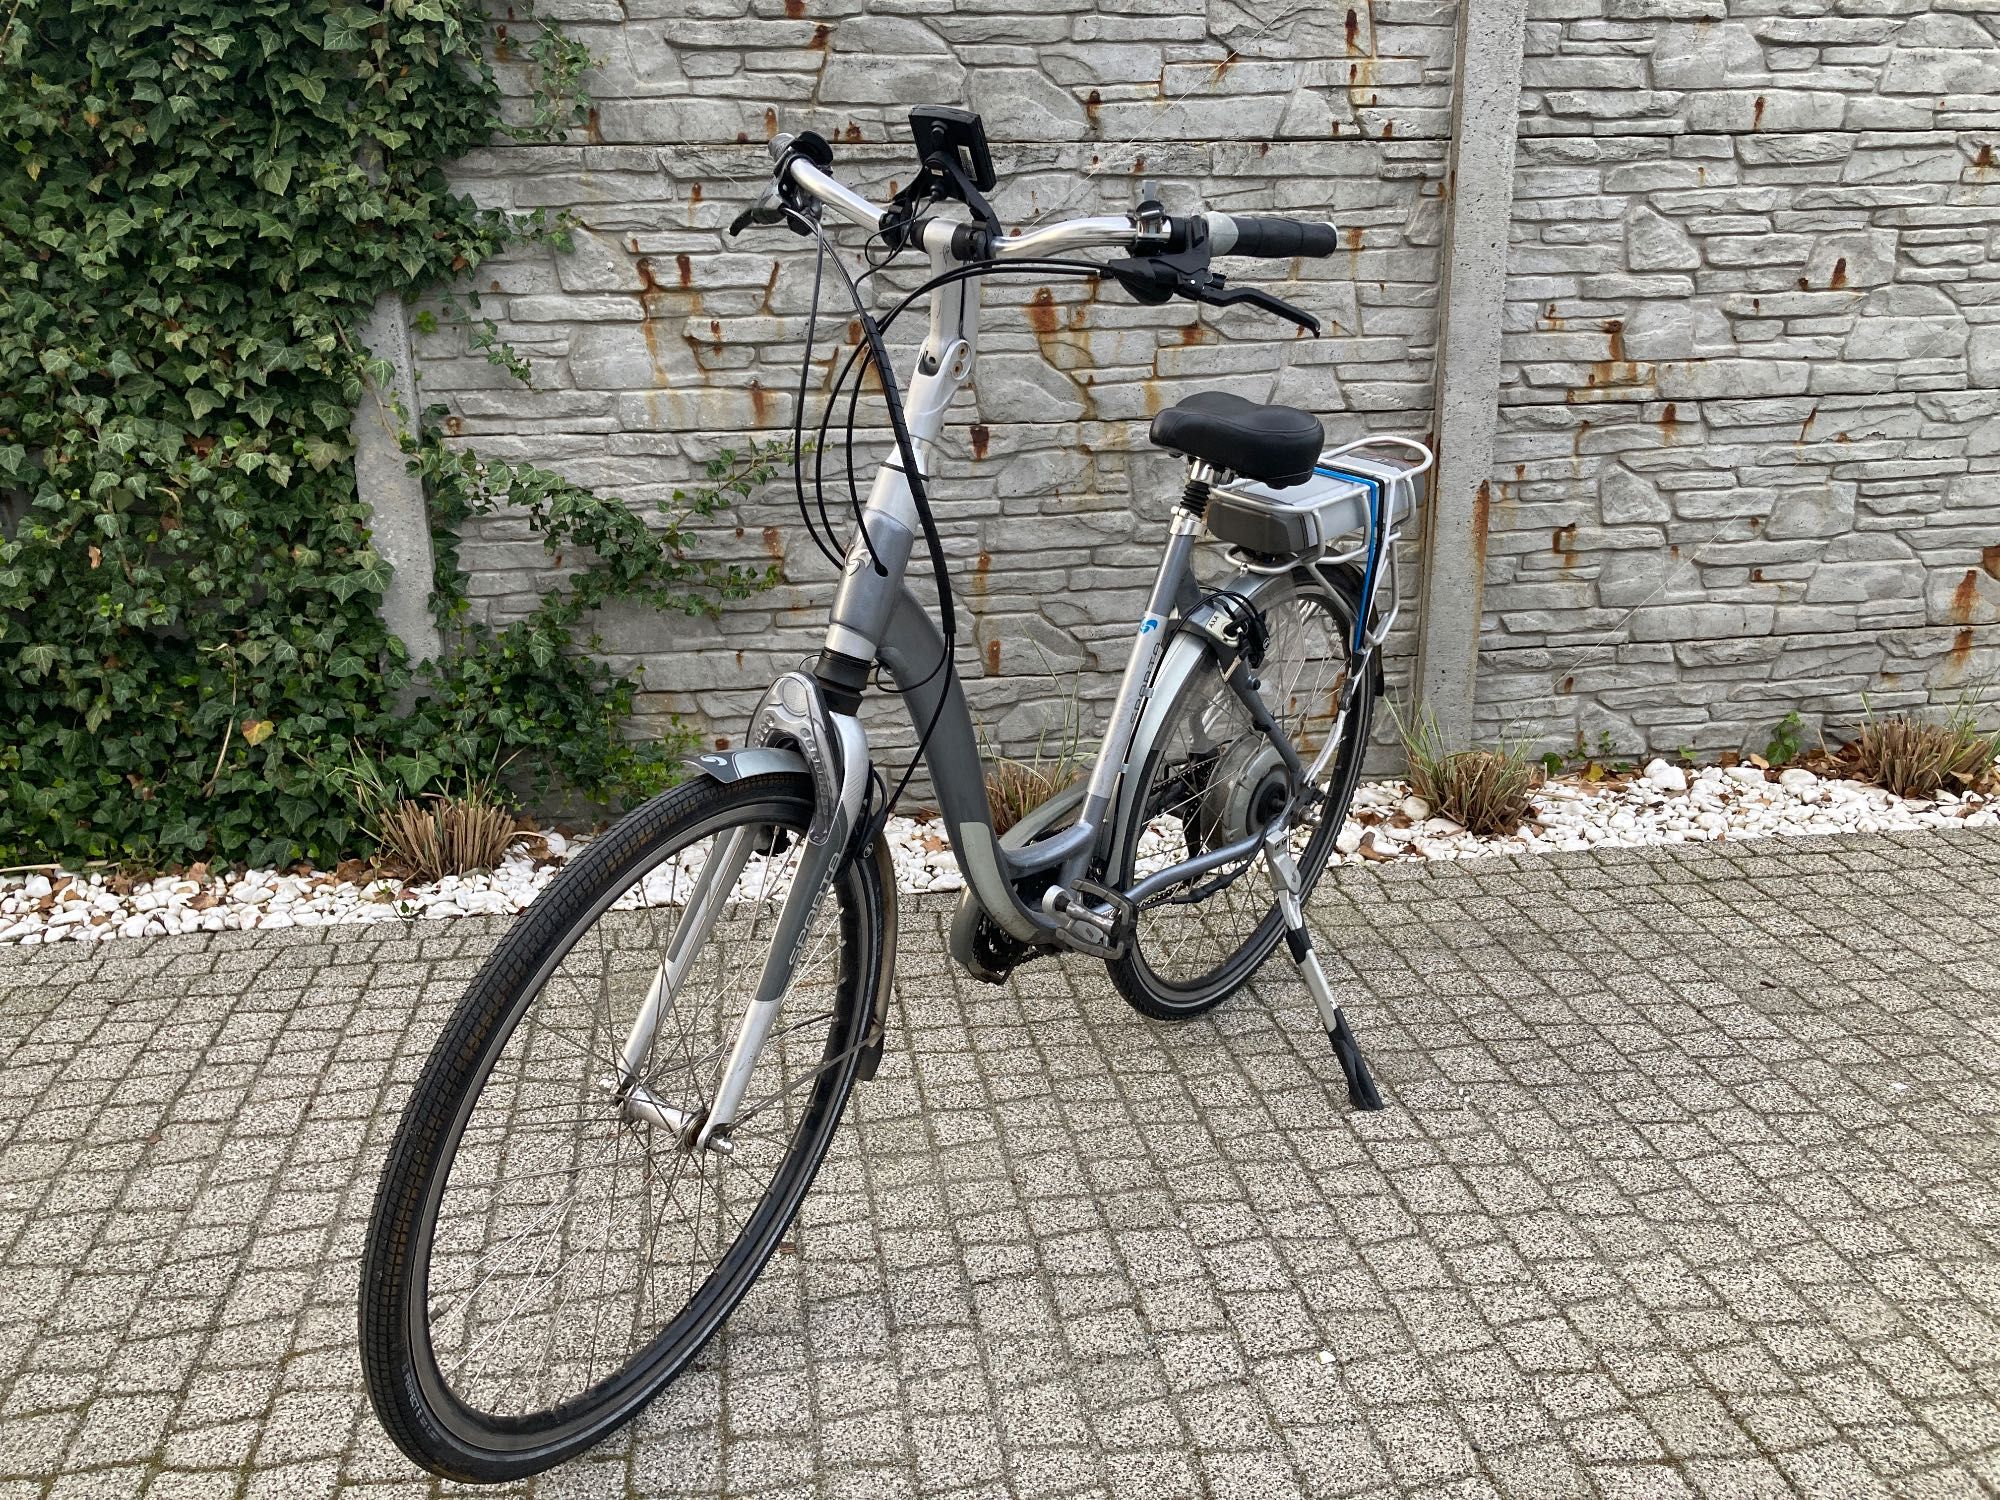 Holenderski rower elektryczny sparta rxs + damka gazelle batavus